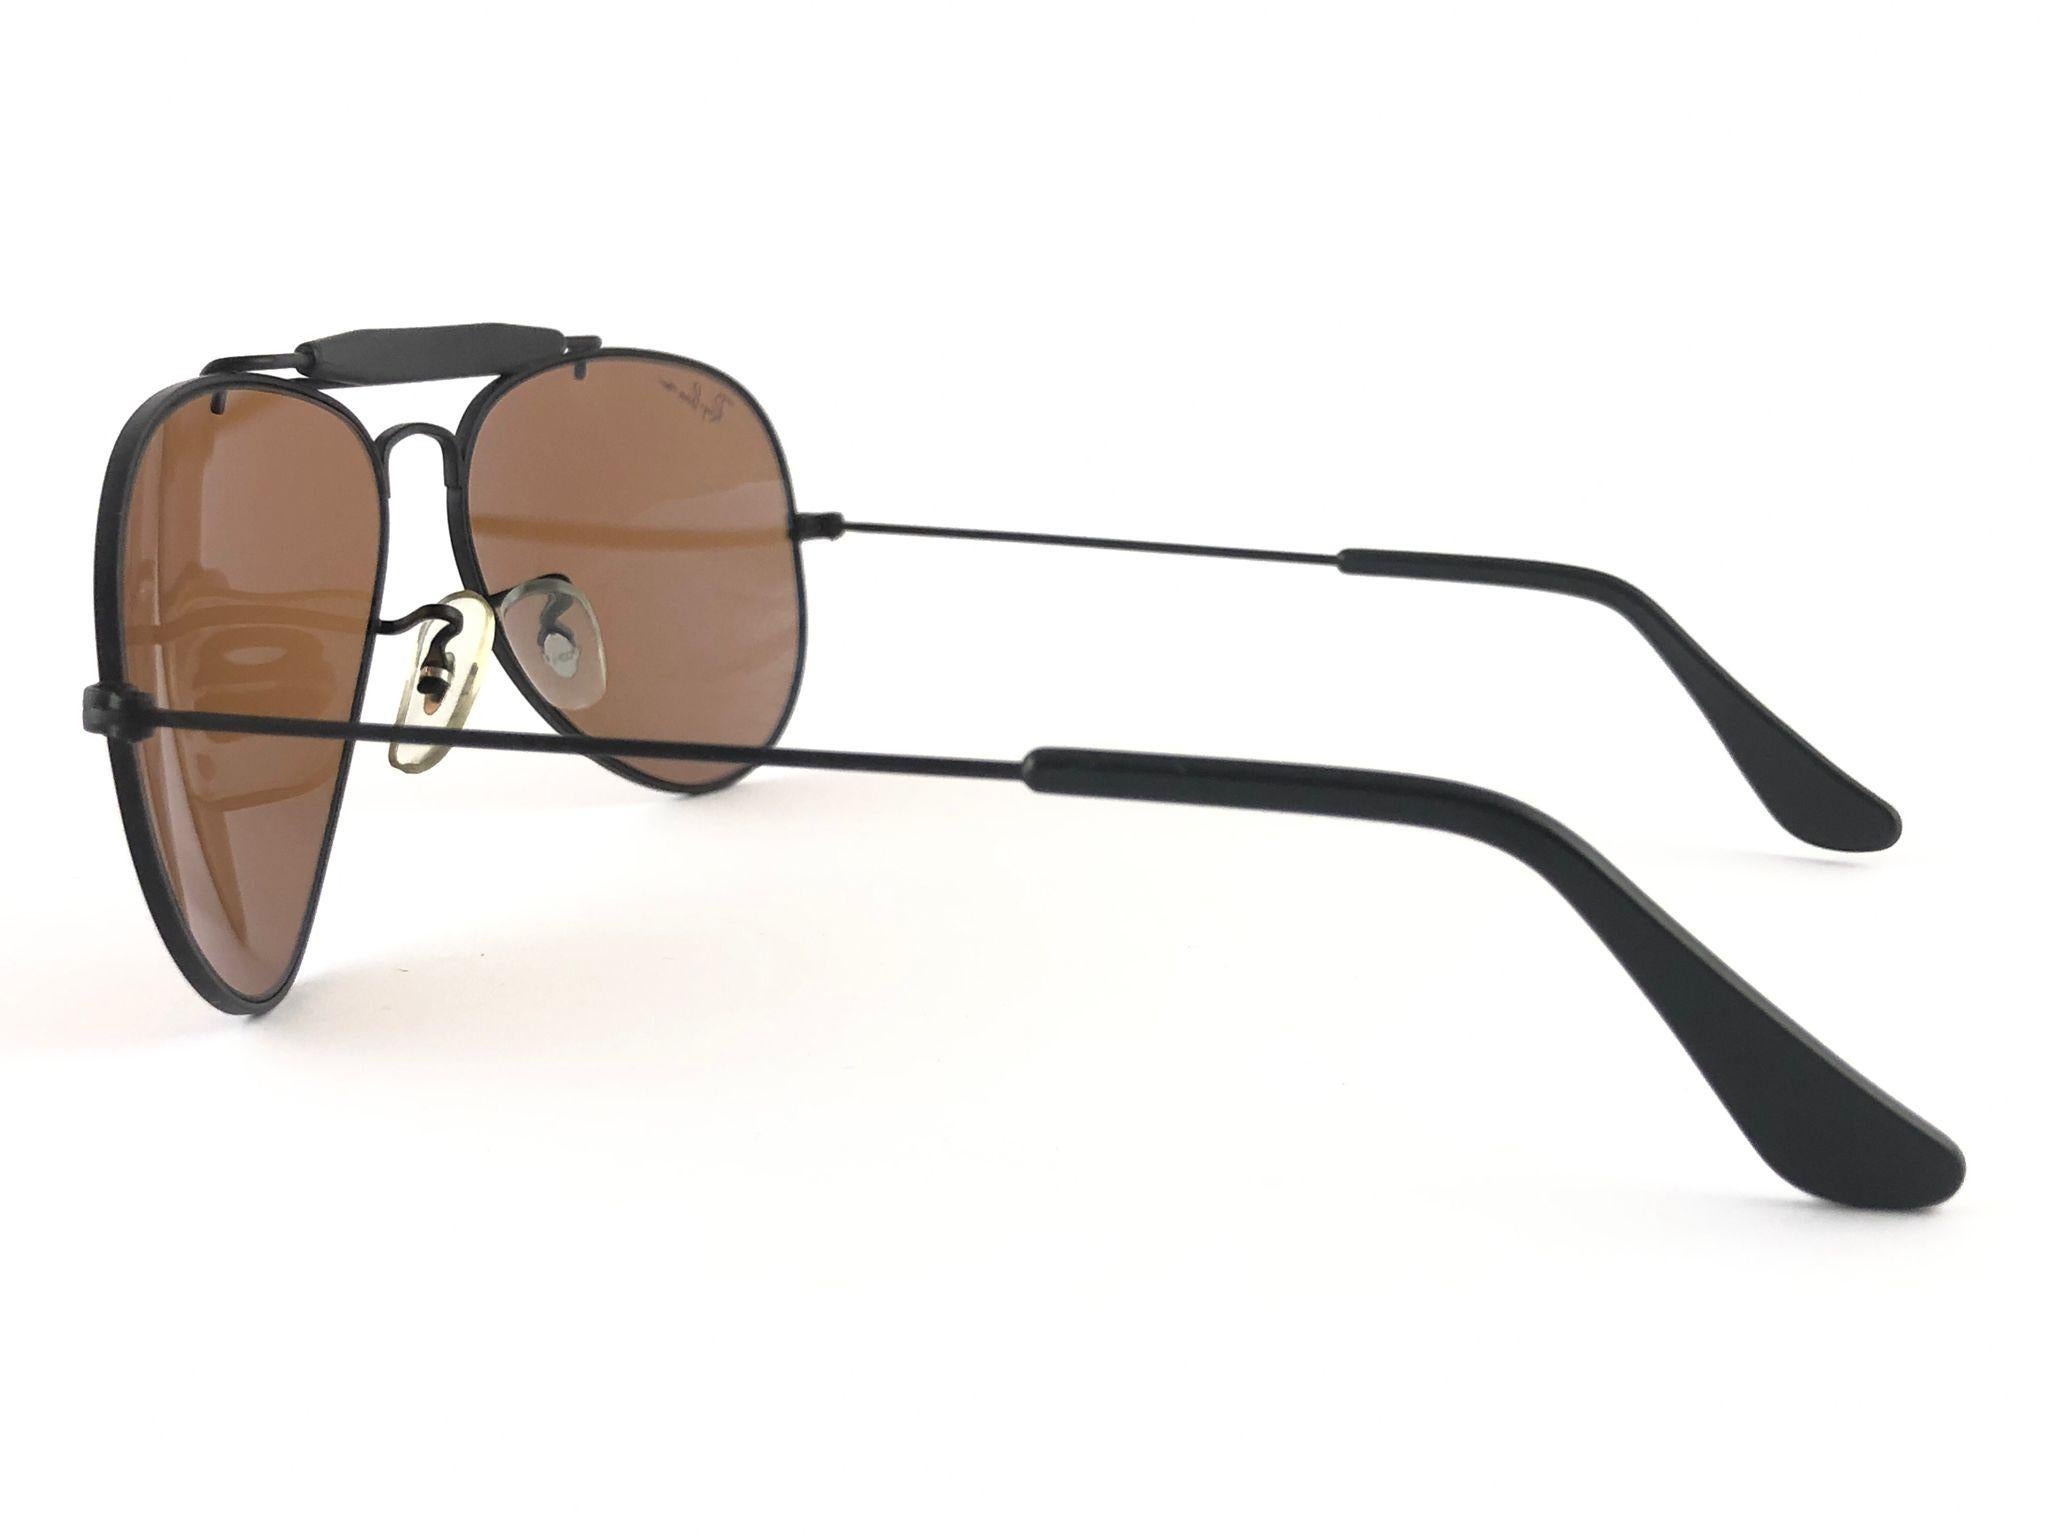 New Ray Ban Chromax 58Mm Outdoorsman B&L Collectors Item USA Sunglasses 2